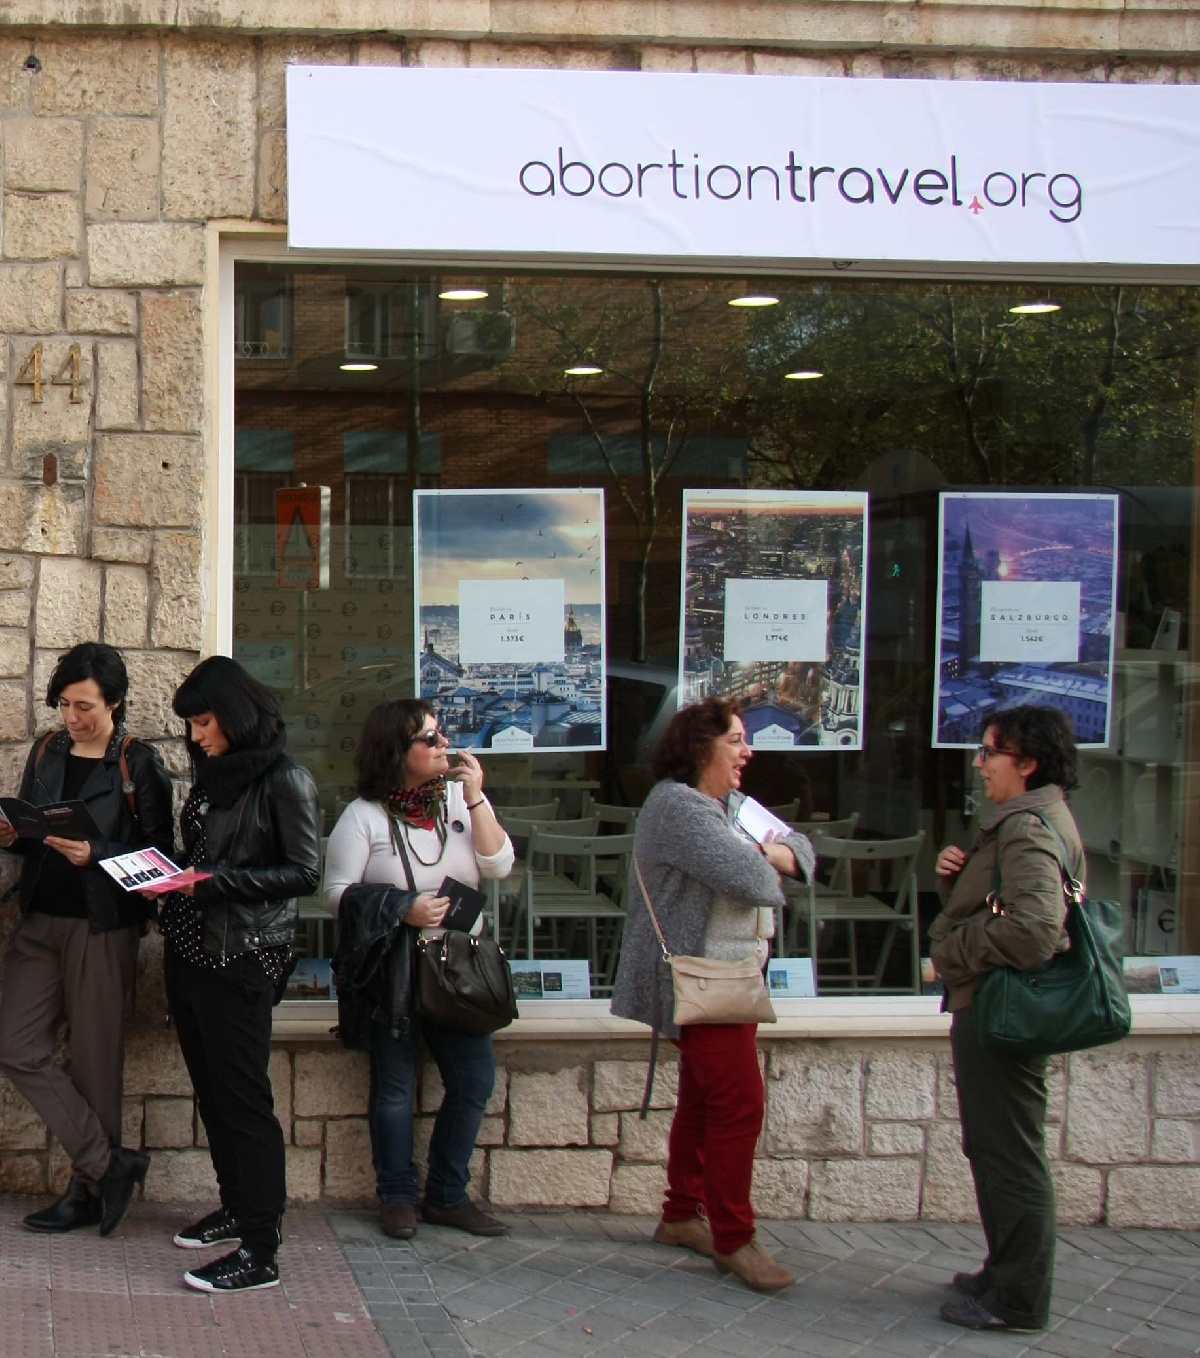 Abortion Travel